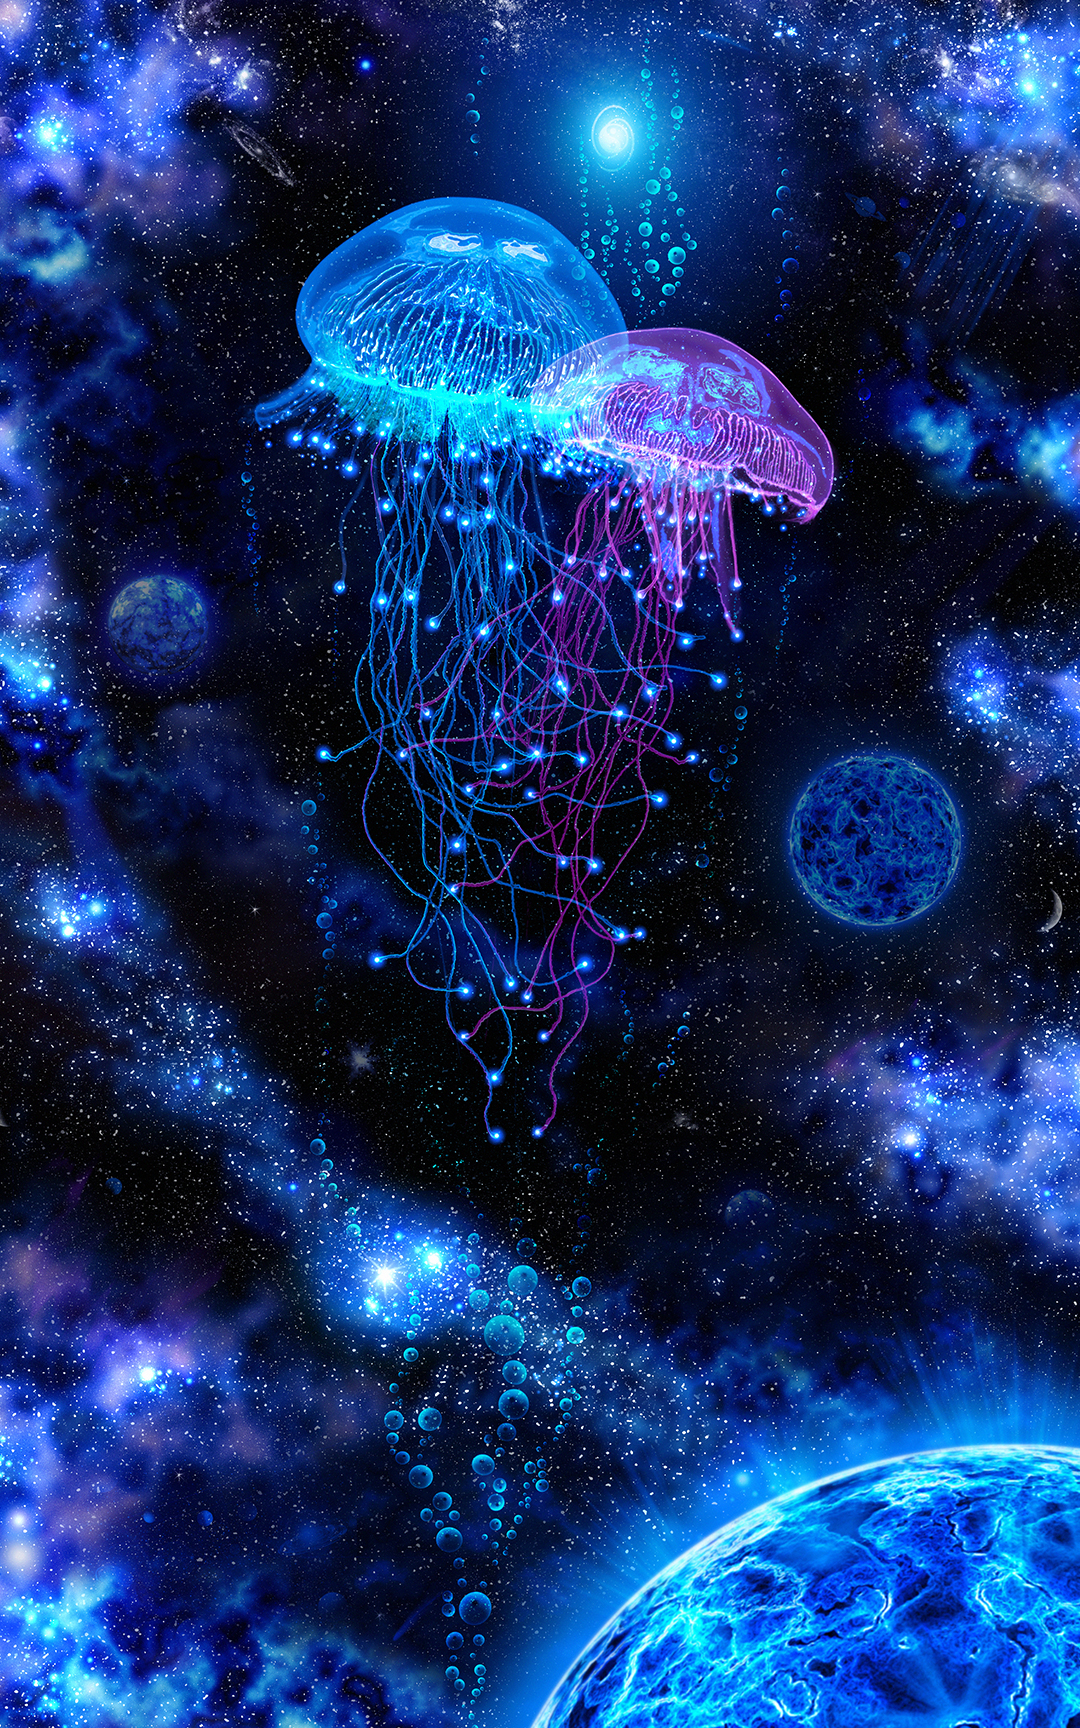 Science Fiction Fantasy Art Surreal Space Digital Art Illustration Universe Alchemy Blue Vertical 1080x1728